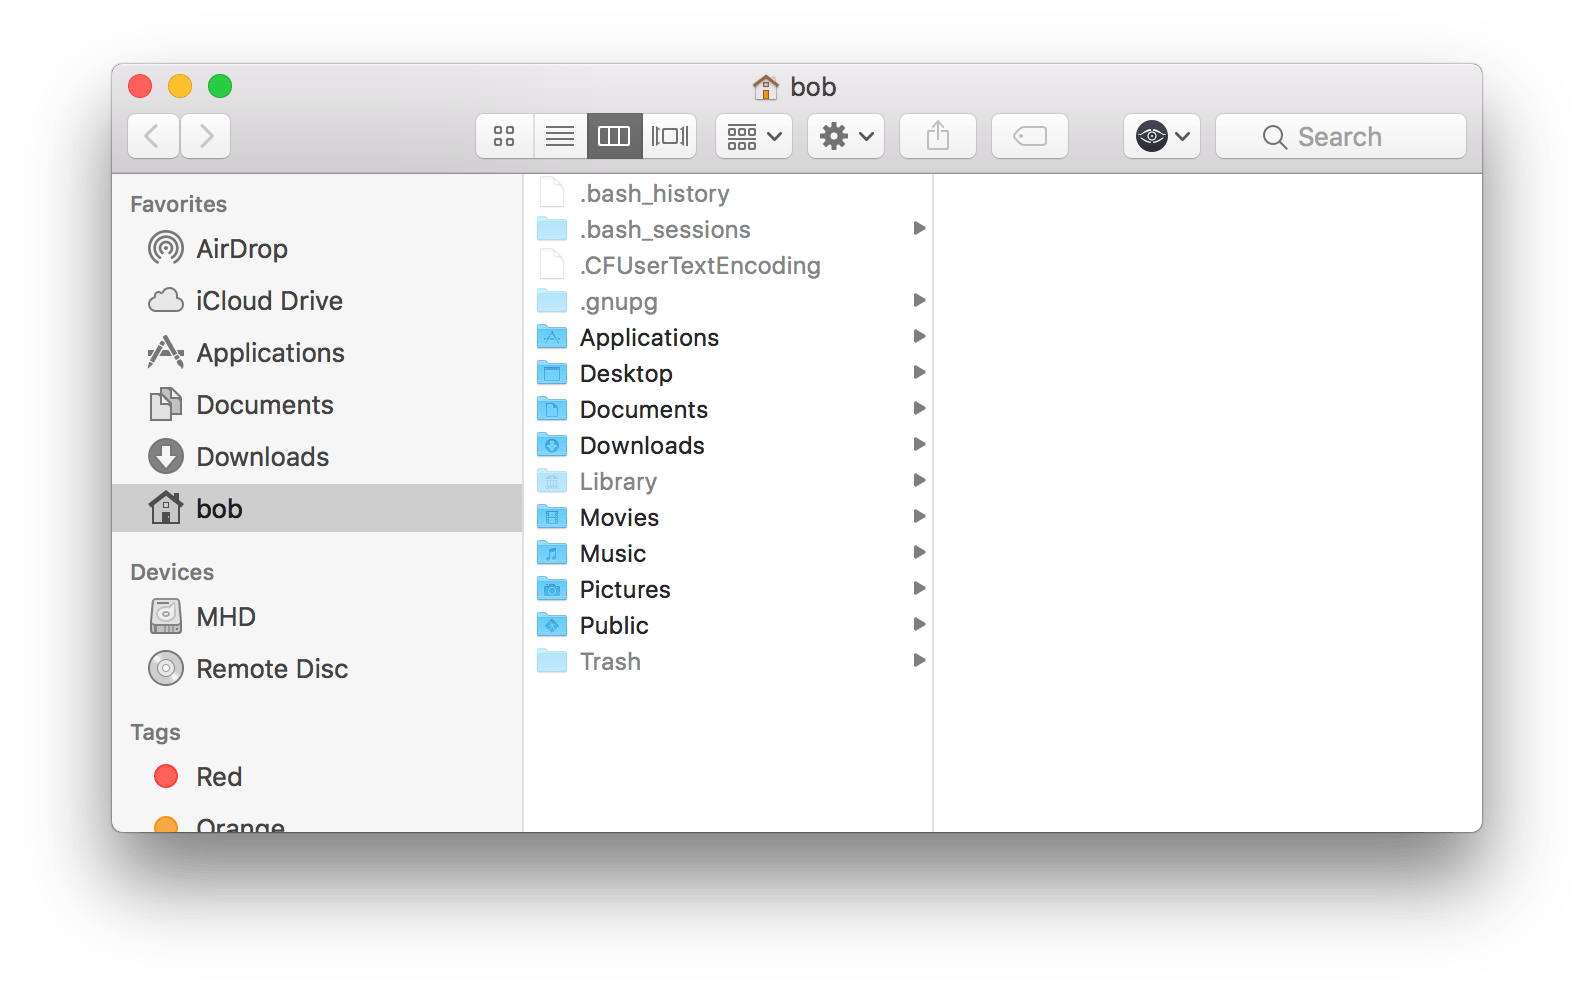 show hidden files in mac folder